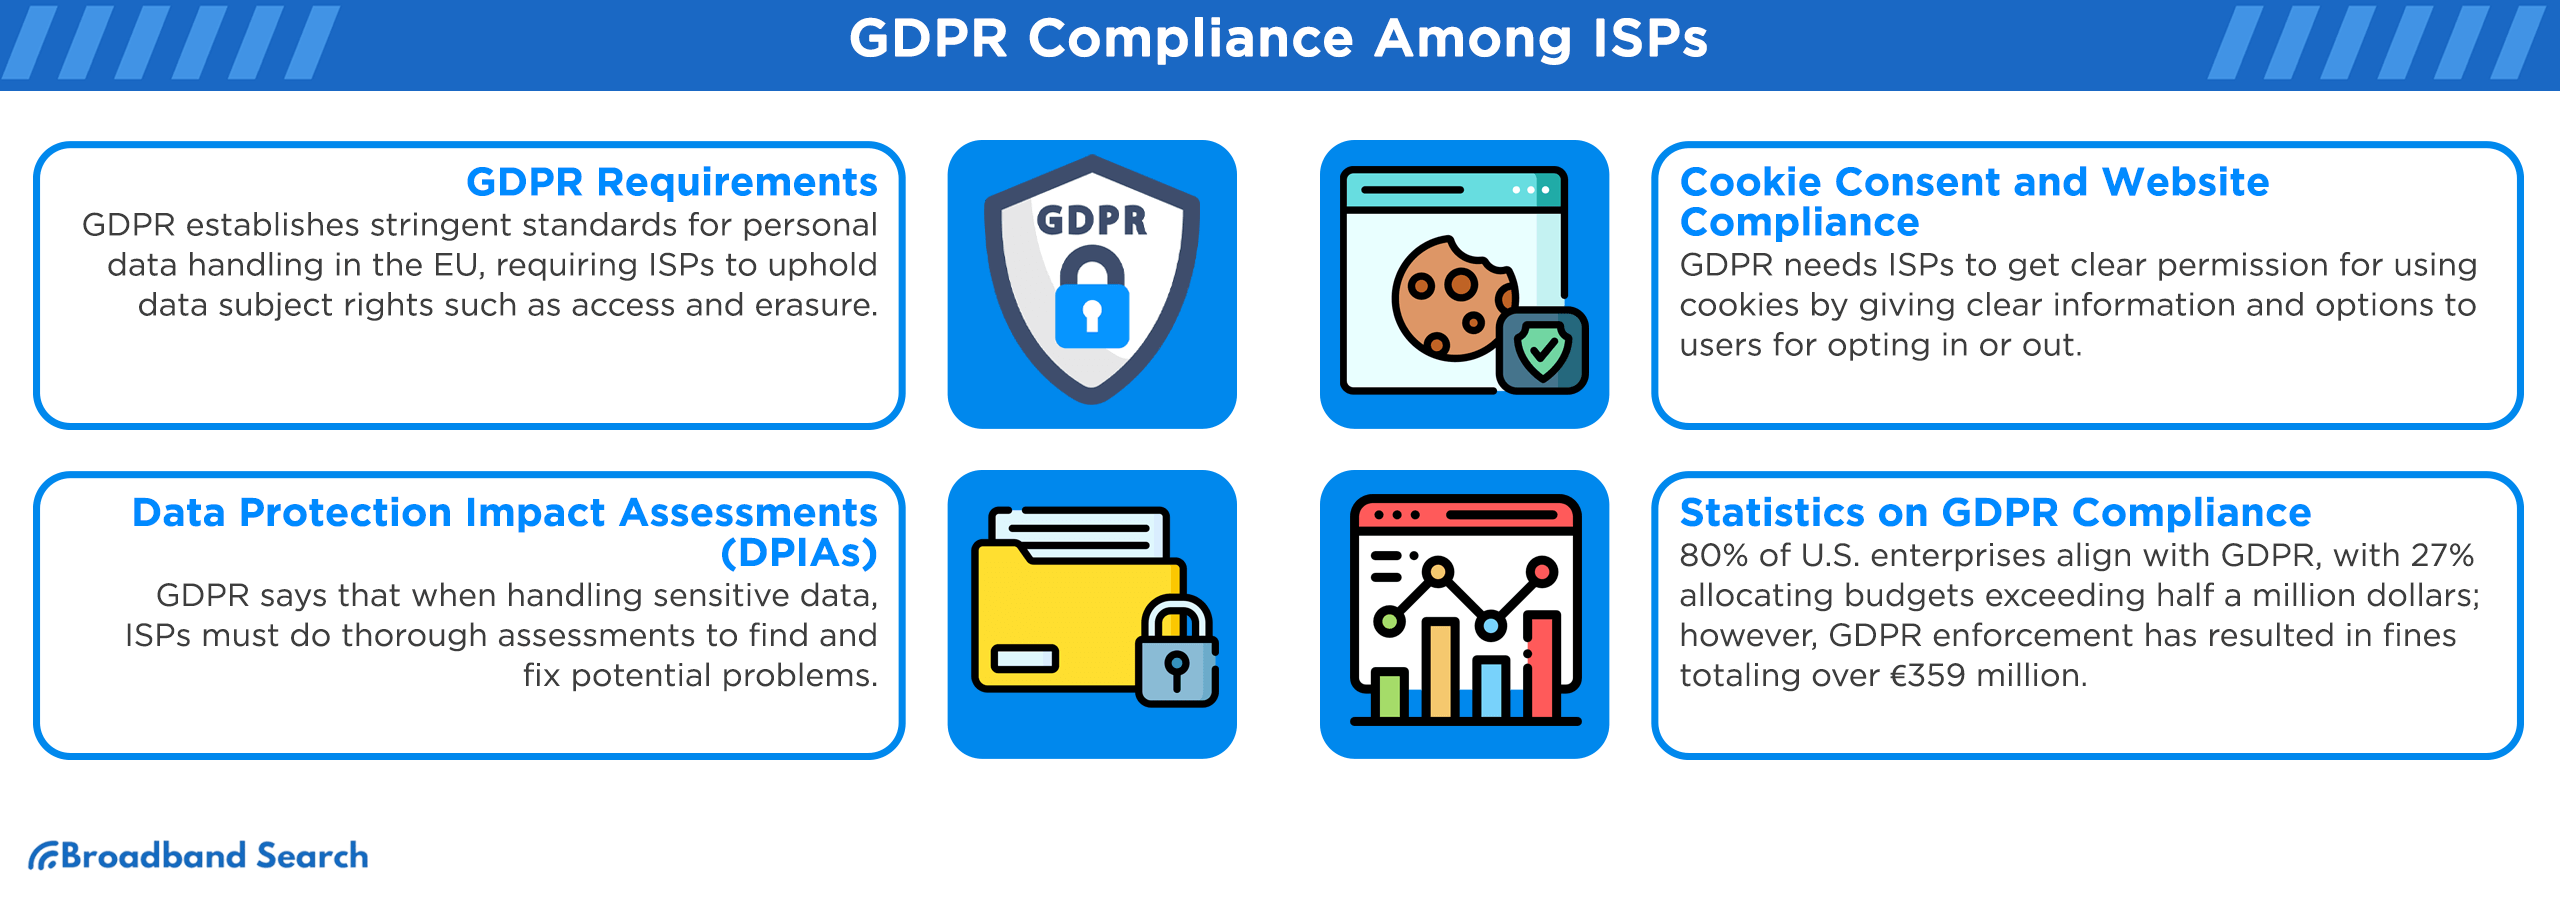 GDPR Compliance among ISPs